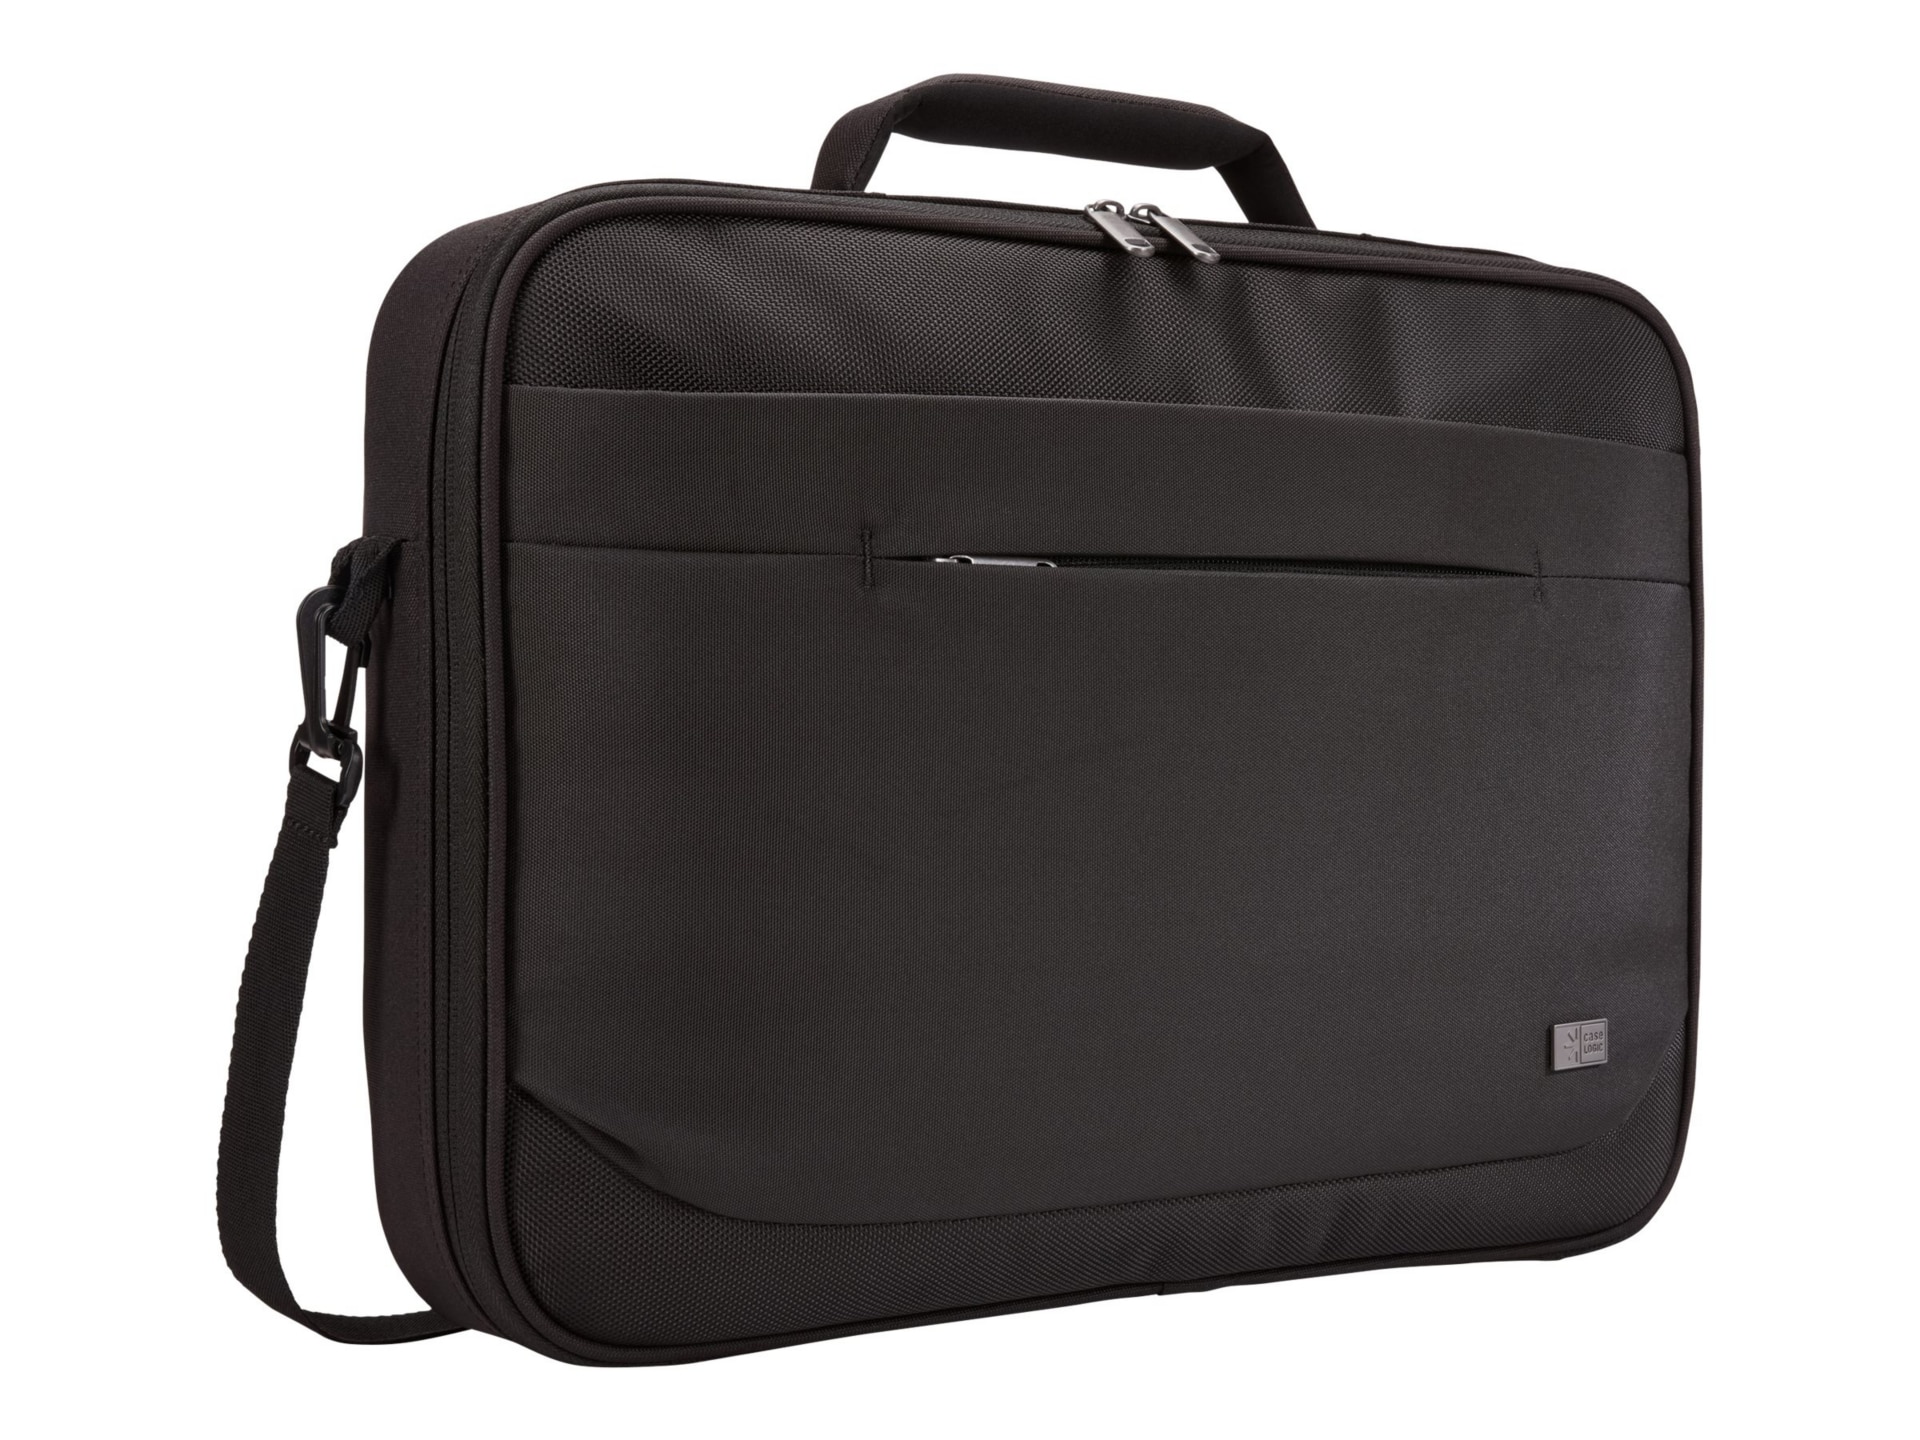 Case Logic Advantage 15.6" Laptop Briefcase - notebook carrying case